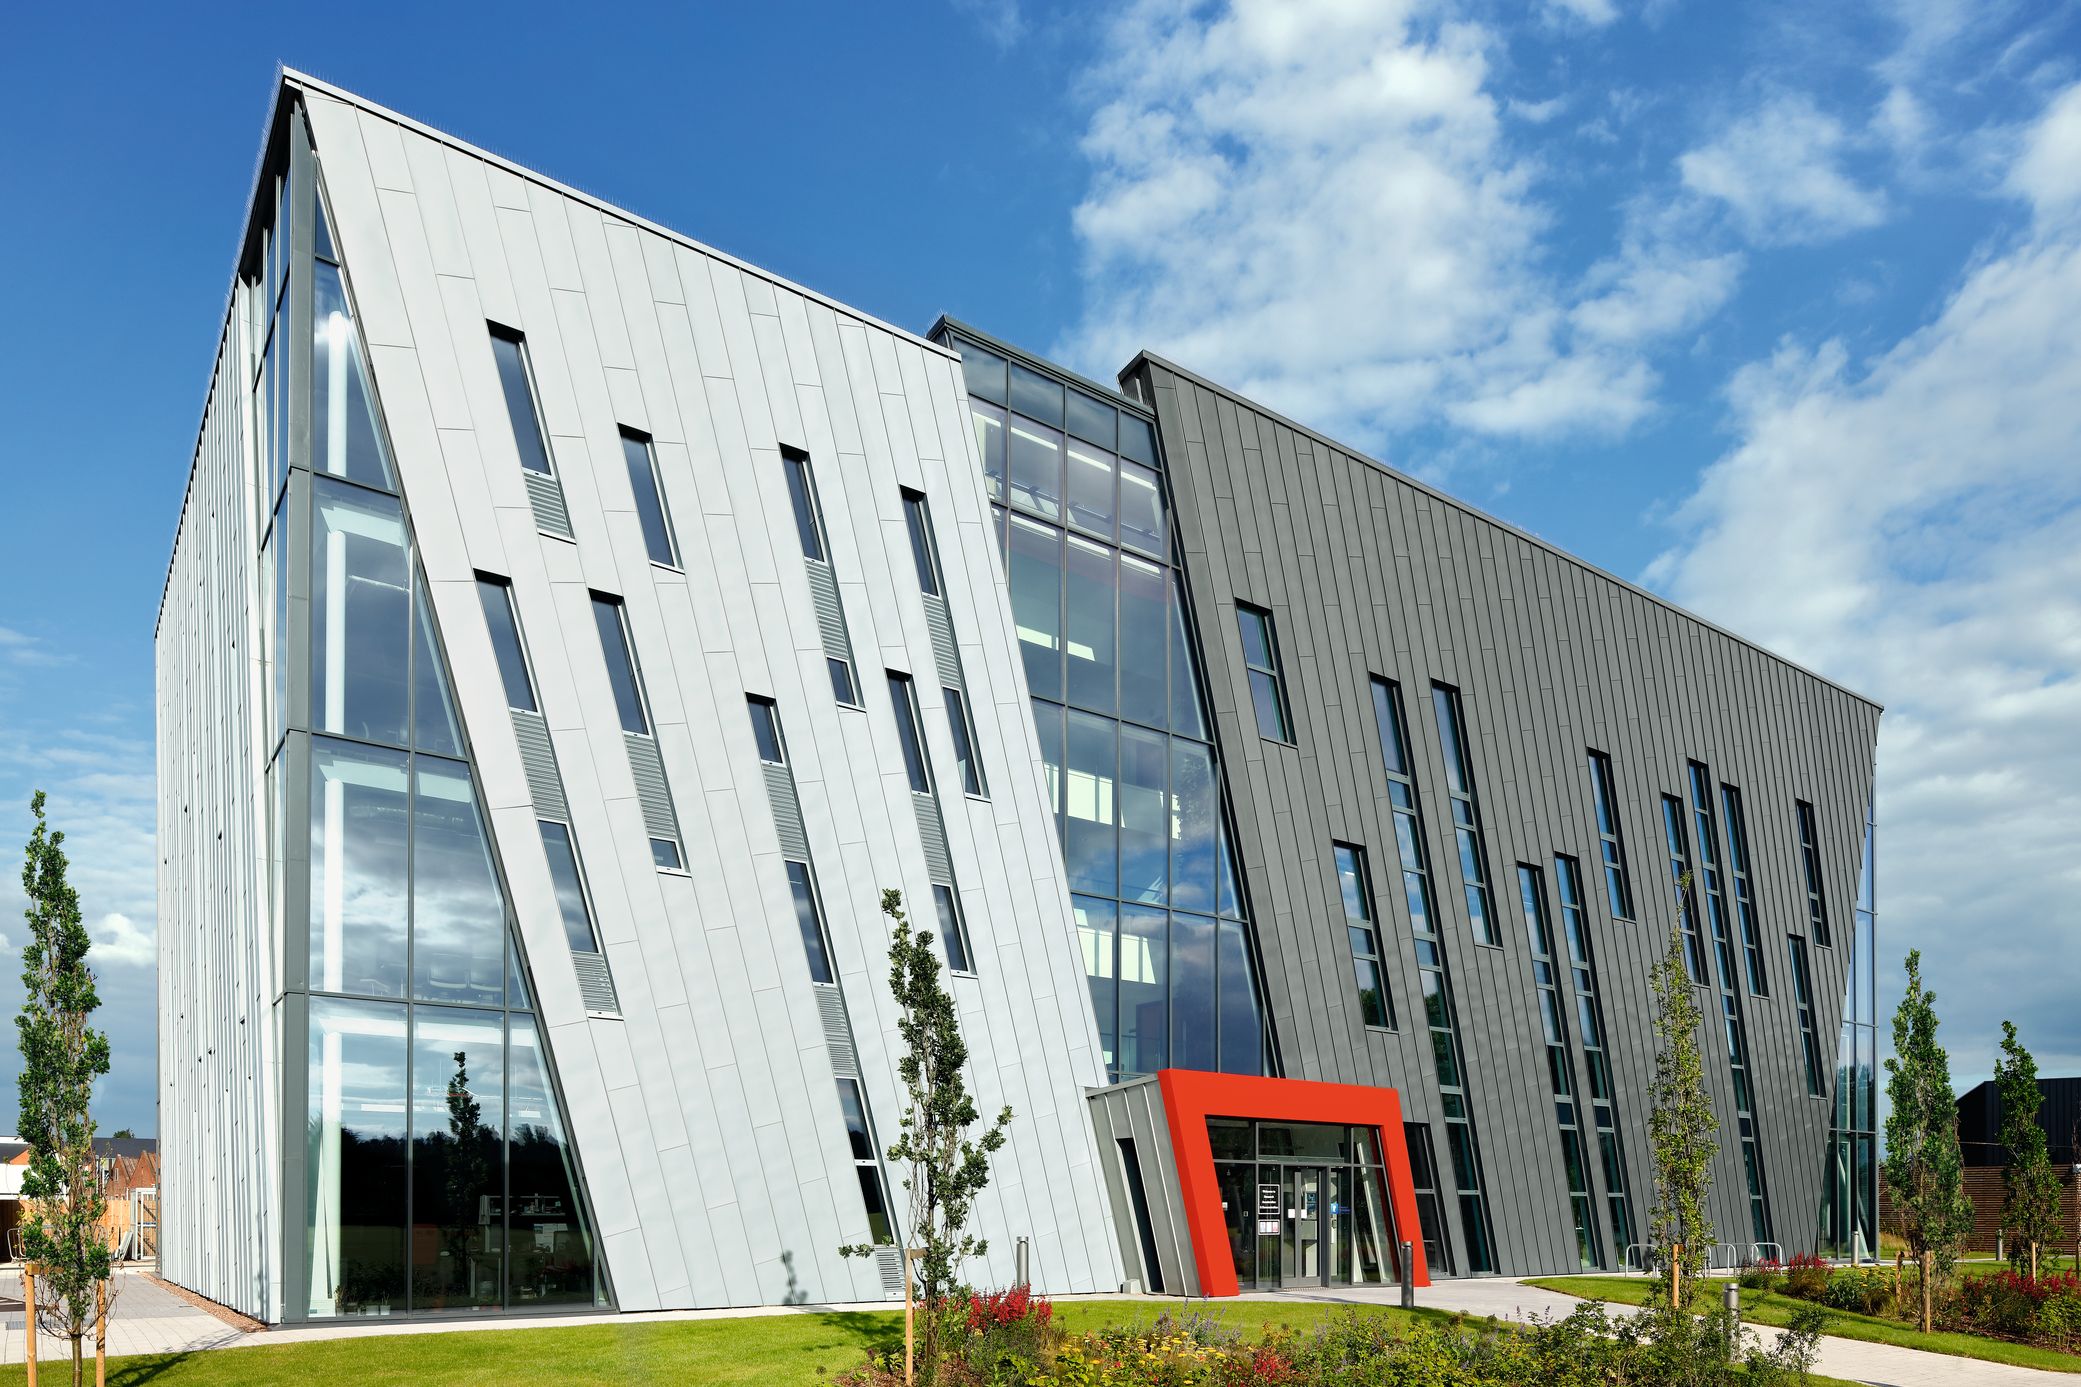 RAD Building University of Nottingham, GB, BREEAM certified, facade: prePATINA blue-grey and graphite-grey, angled-standing-seam